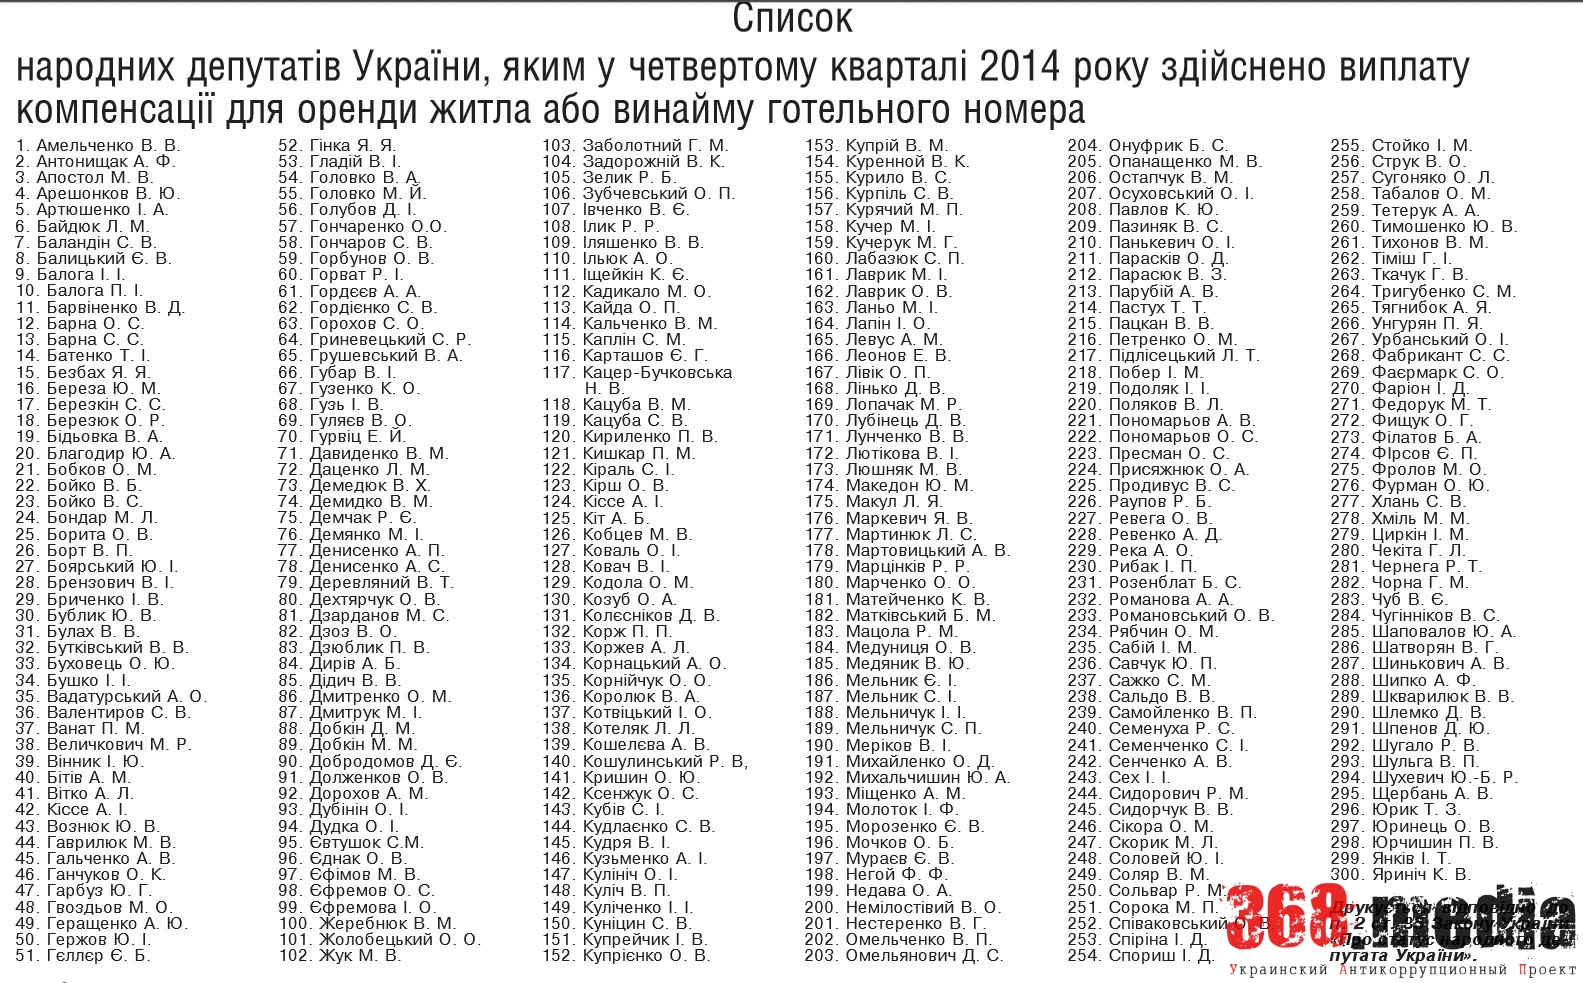 Список нуждающихся. Фото: kievnews.glavcom.ua